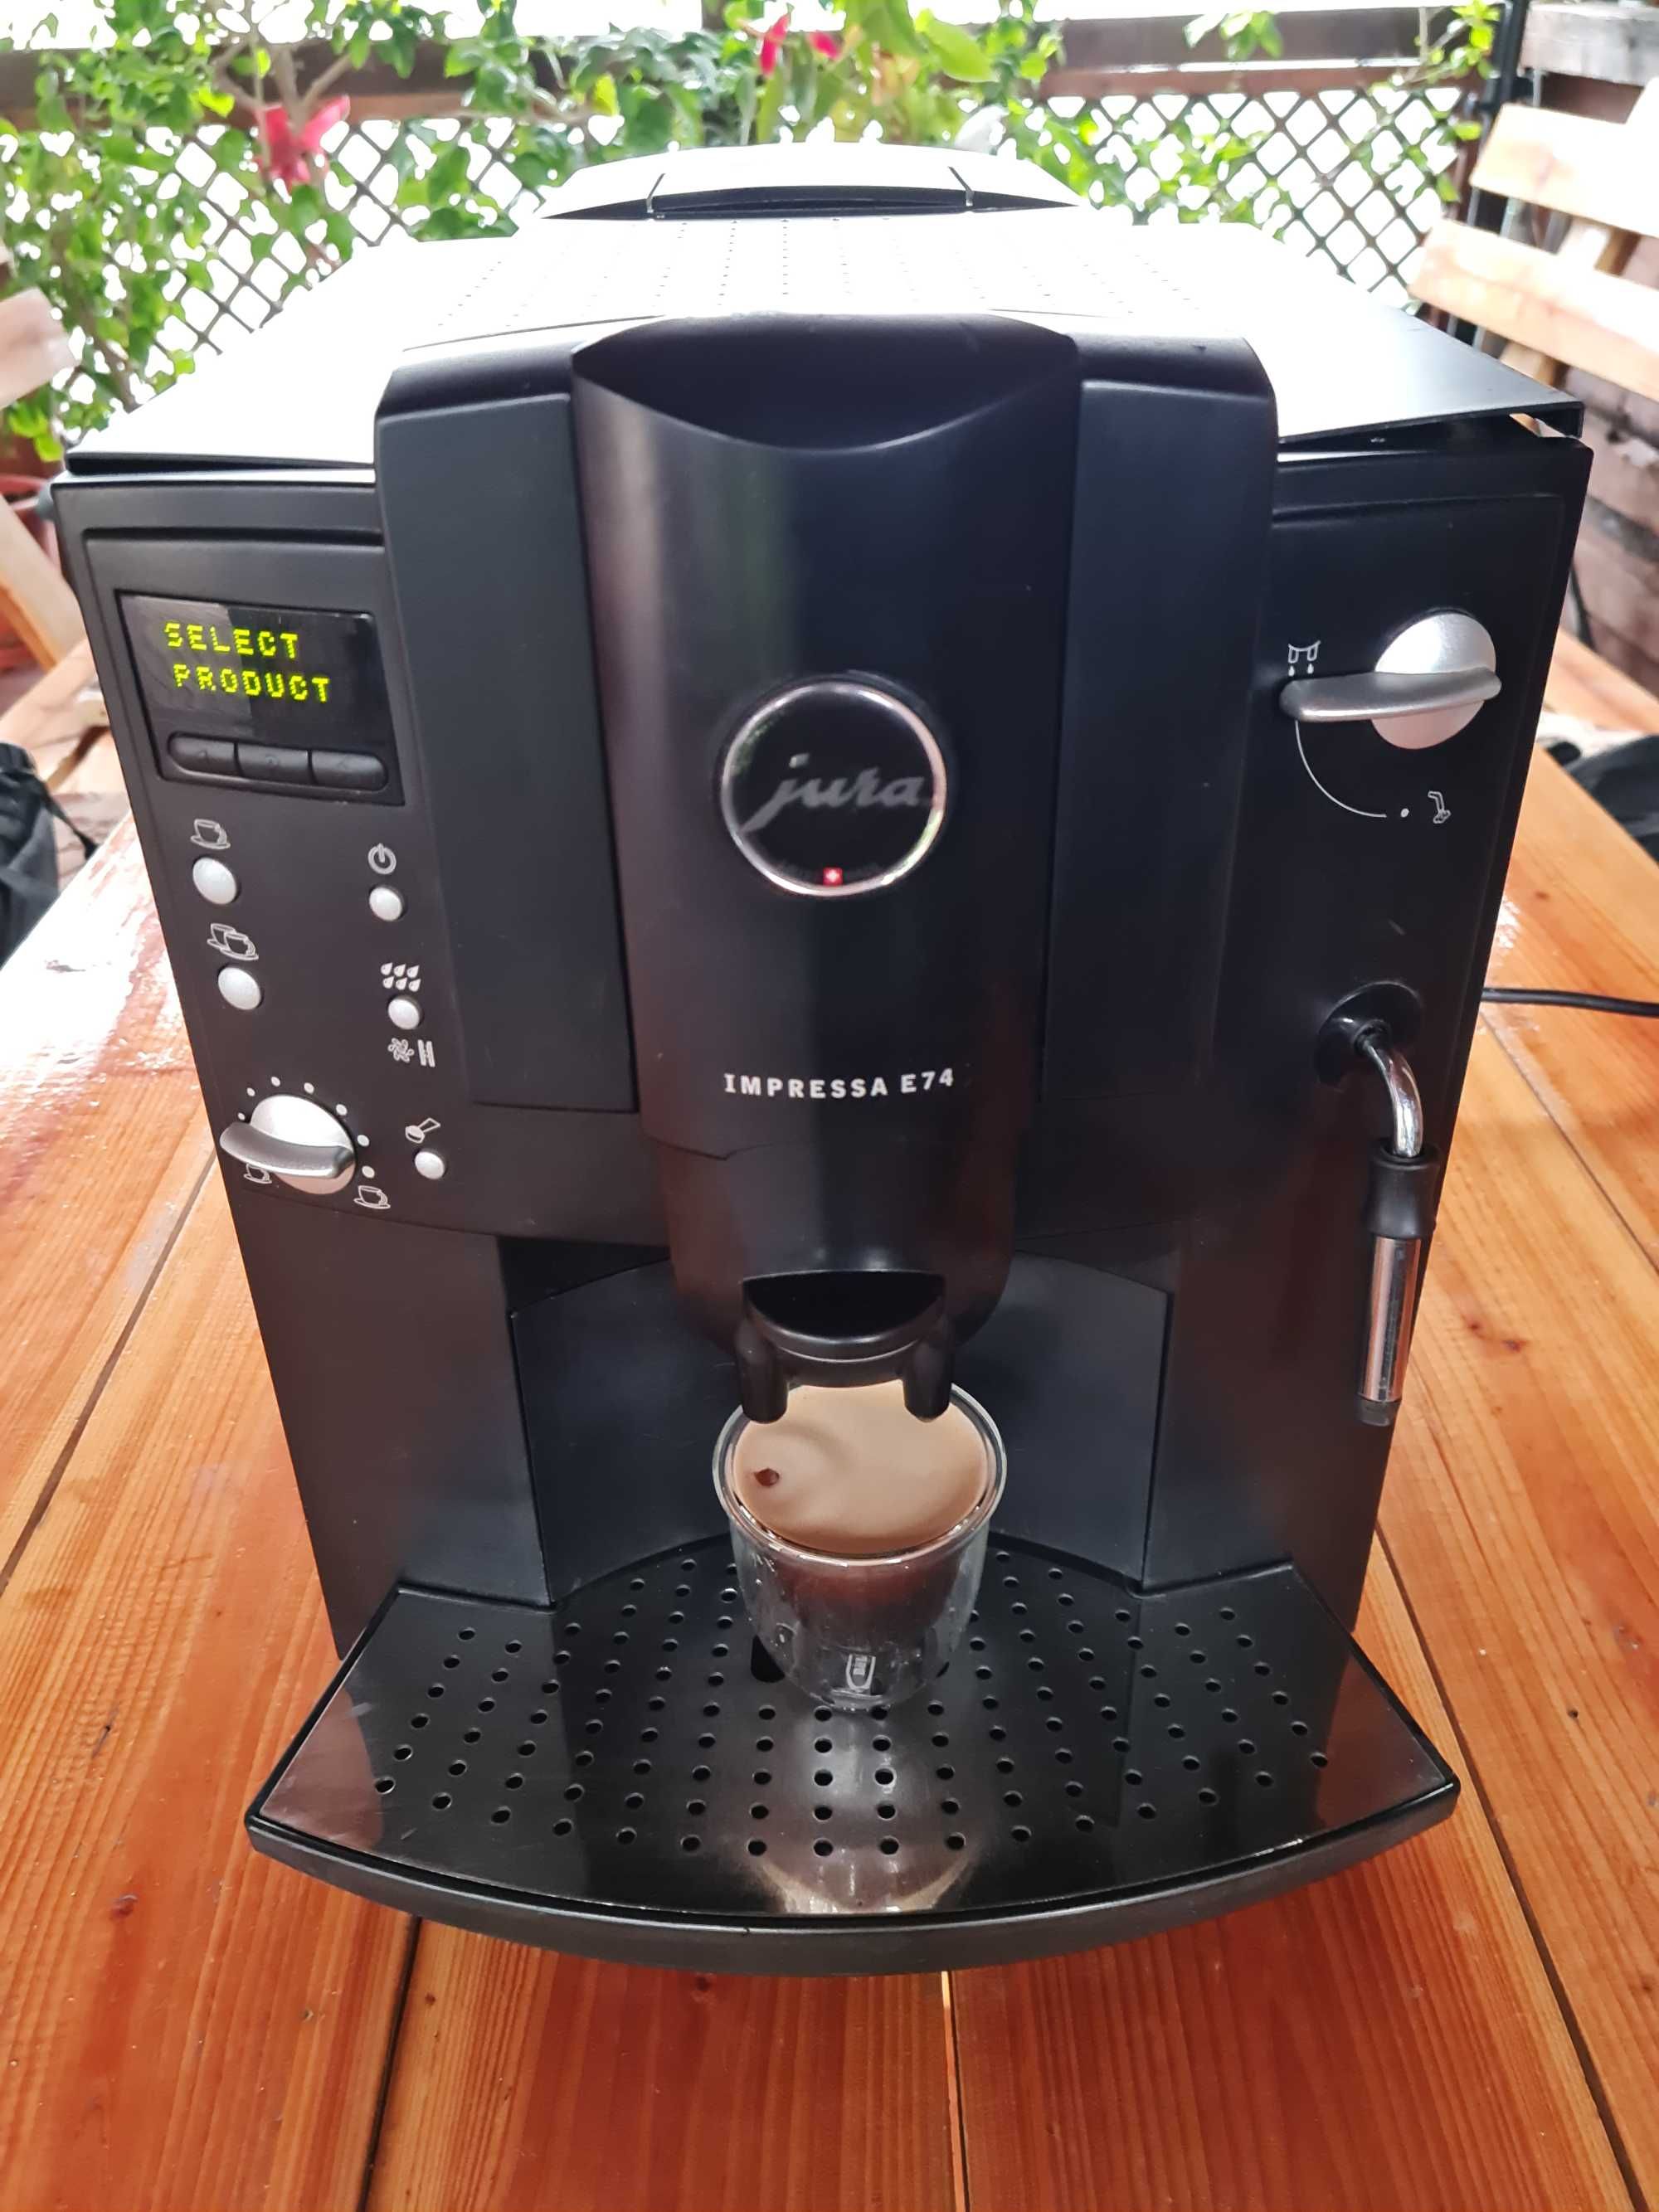 Espressor cafea boabe automat JURA Impressa E74